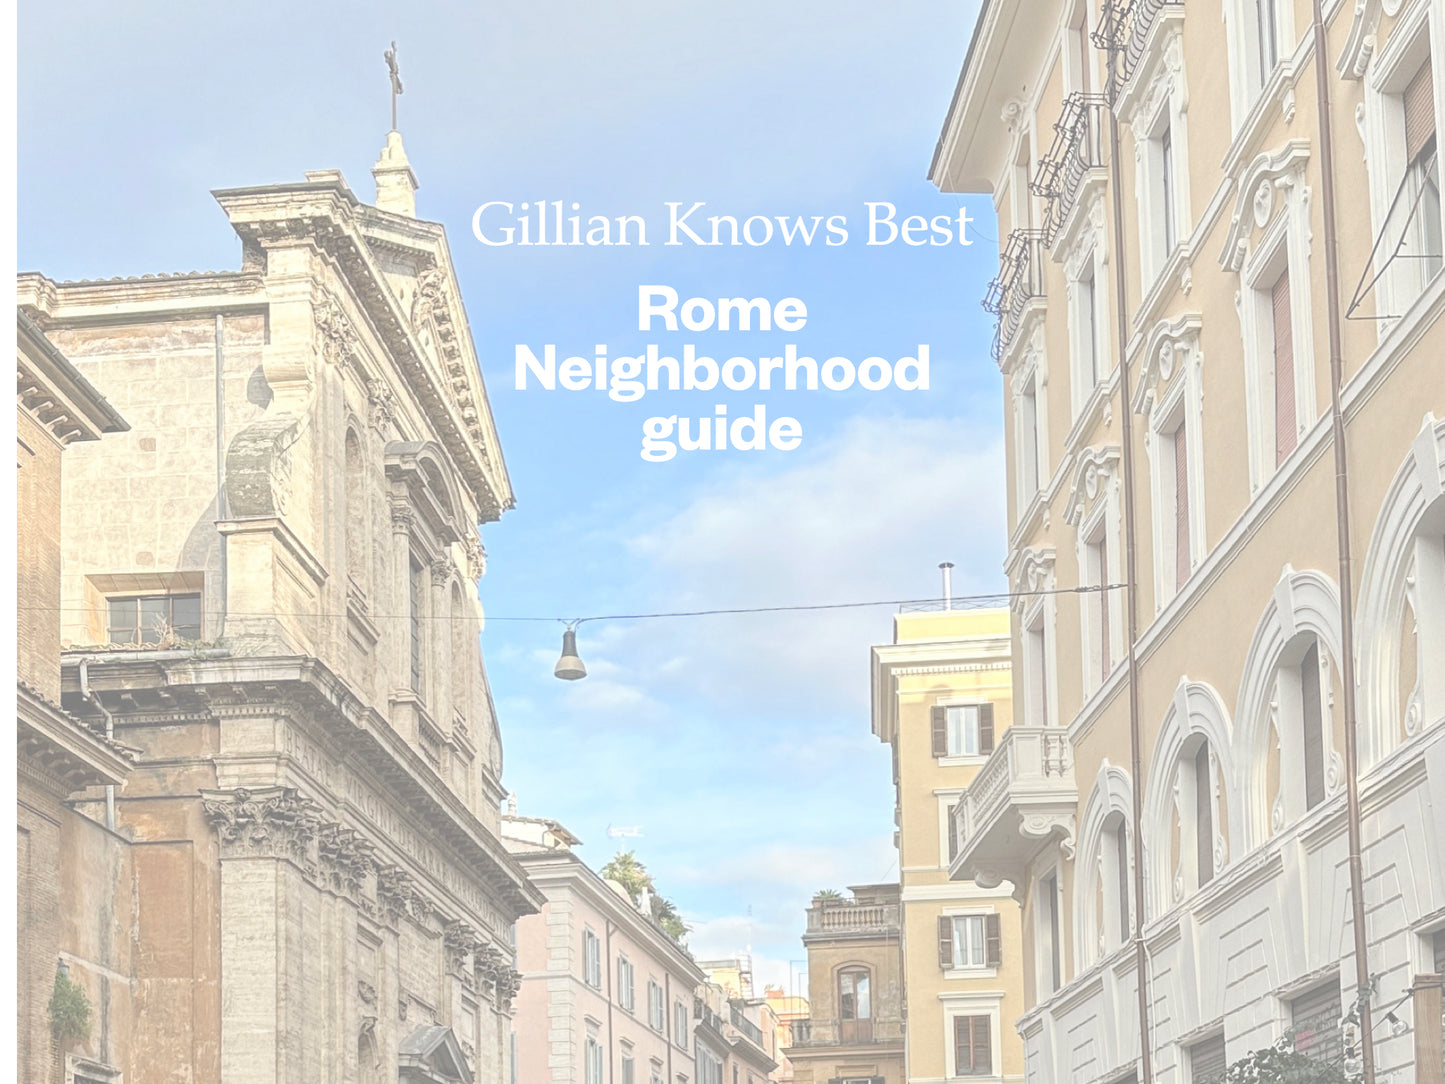 Gillian Knows Best Rome neighborhood guide